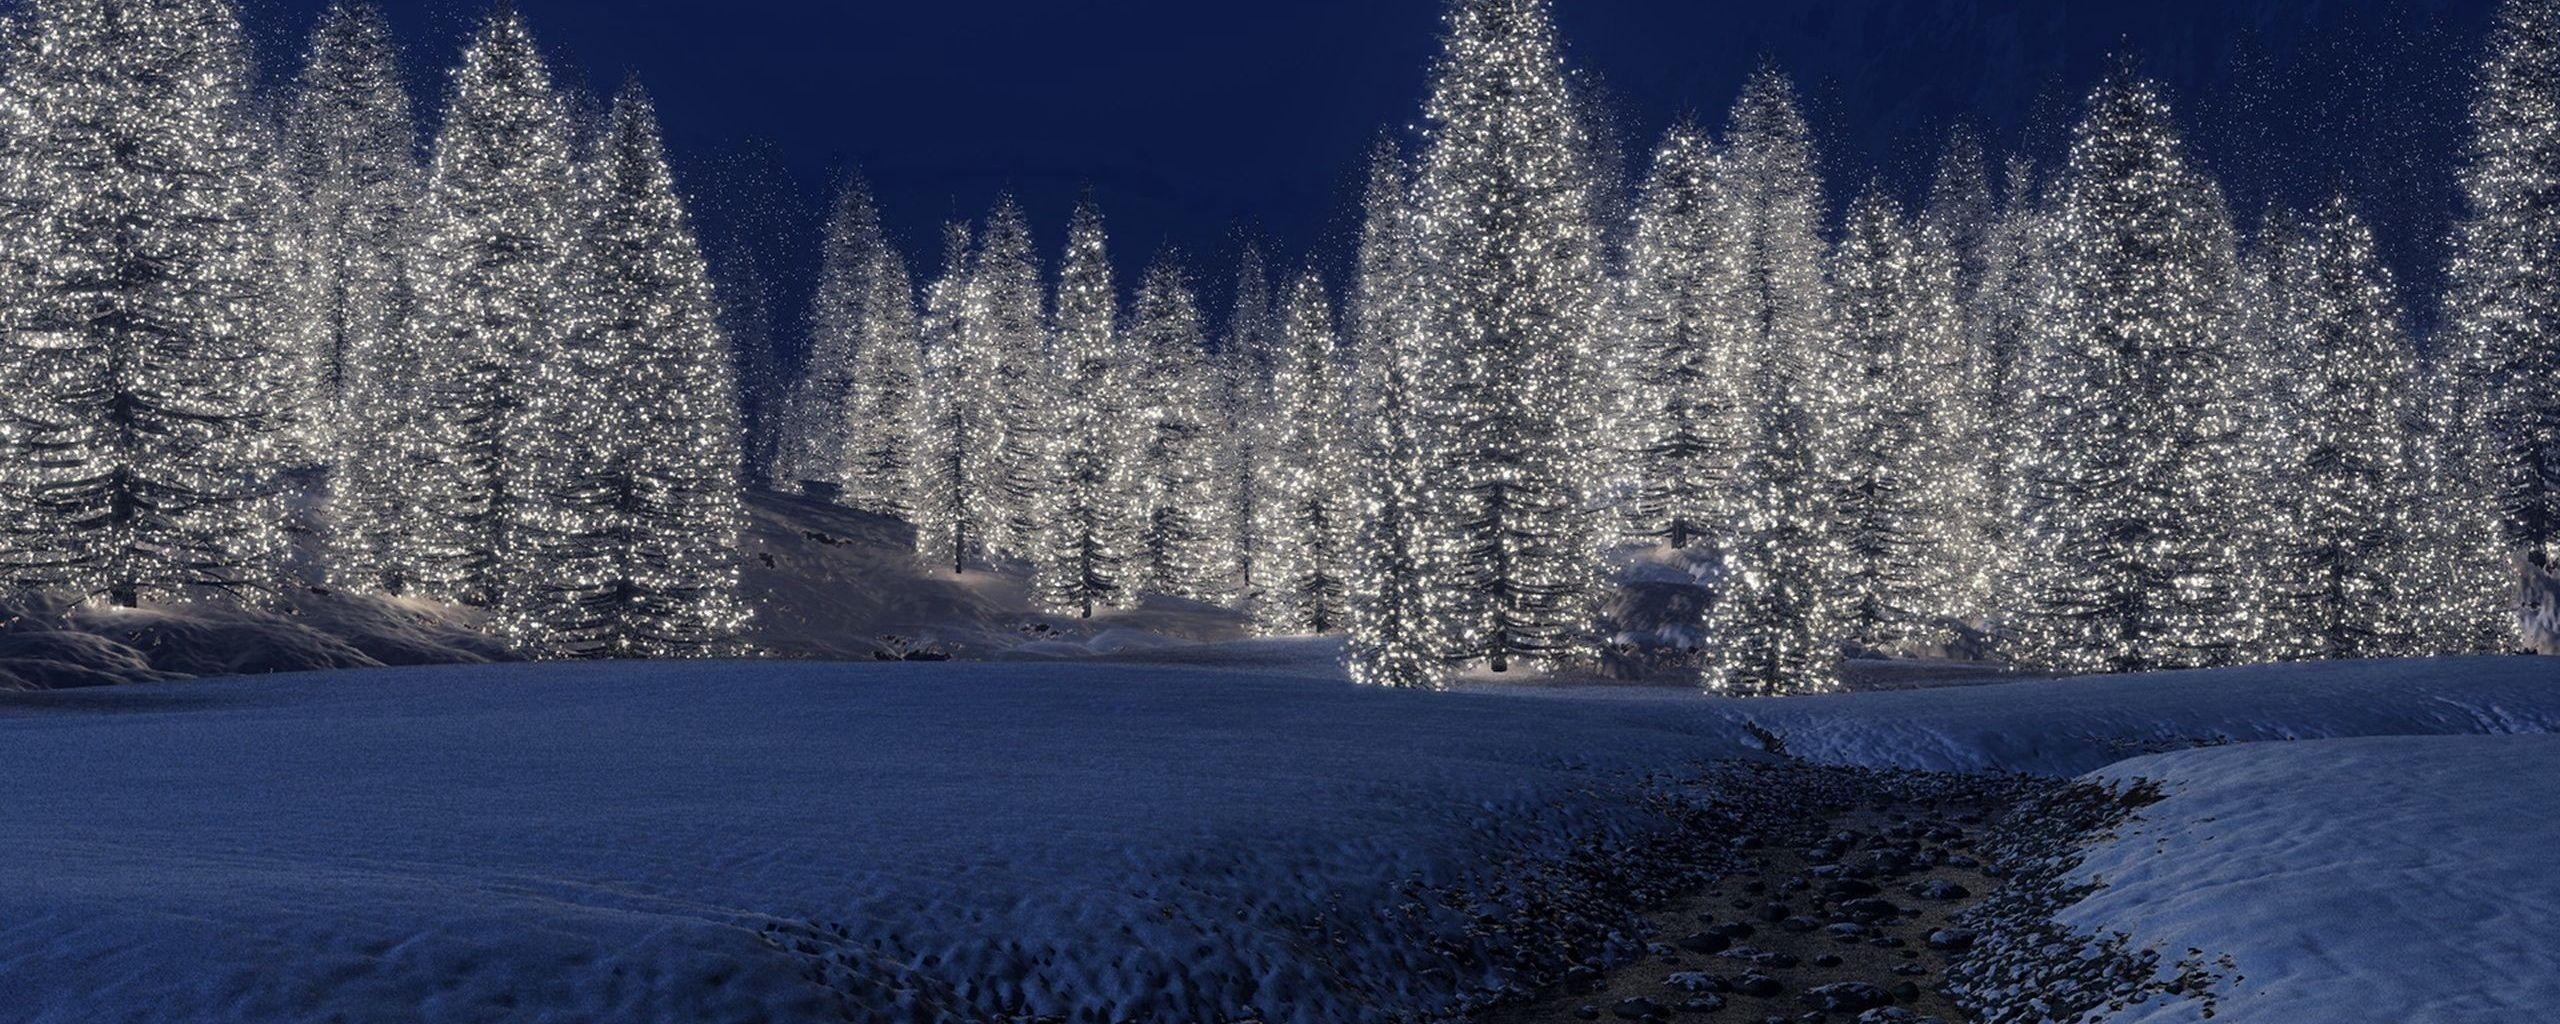 Winter Dual Screen Wallpapers - Top Free Winter Dual Screen Backgrounds ...